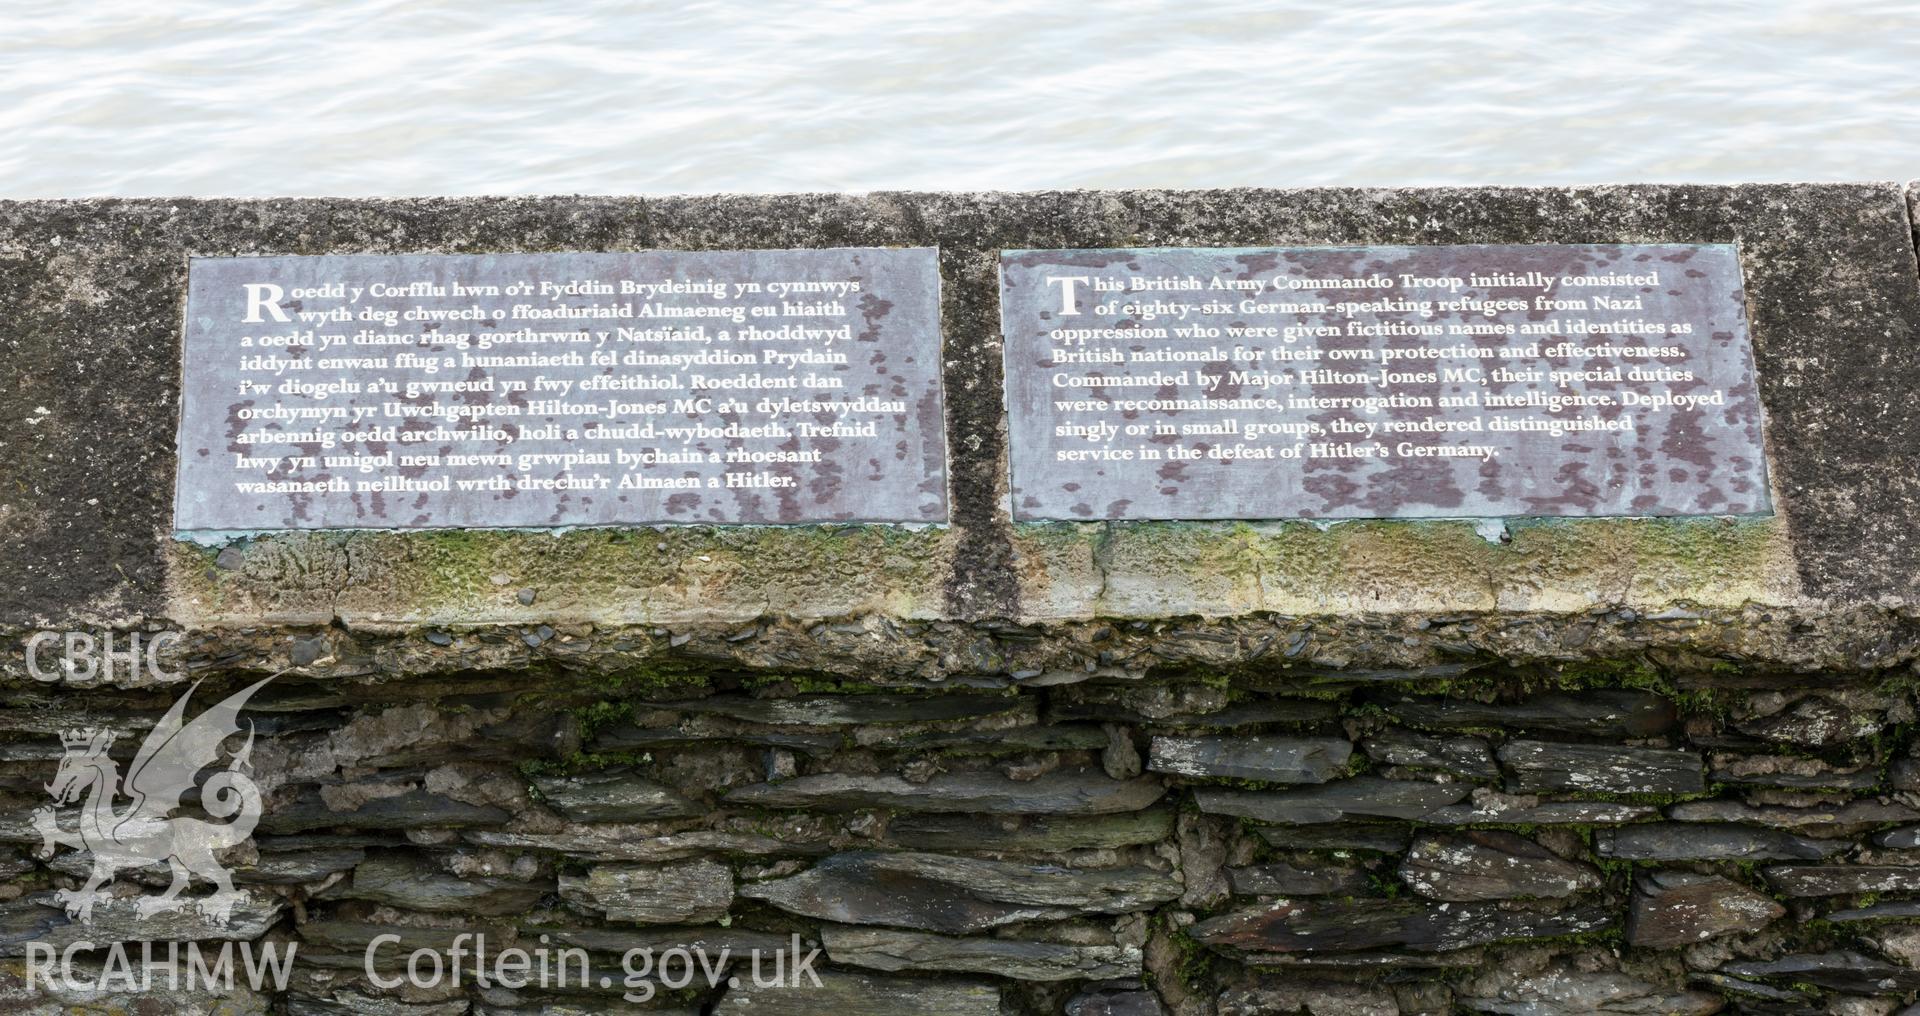 Bilingual text on sea wall explaining memorial